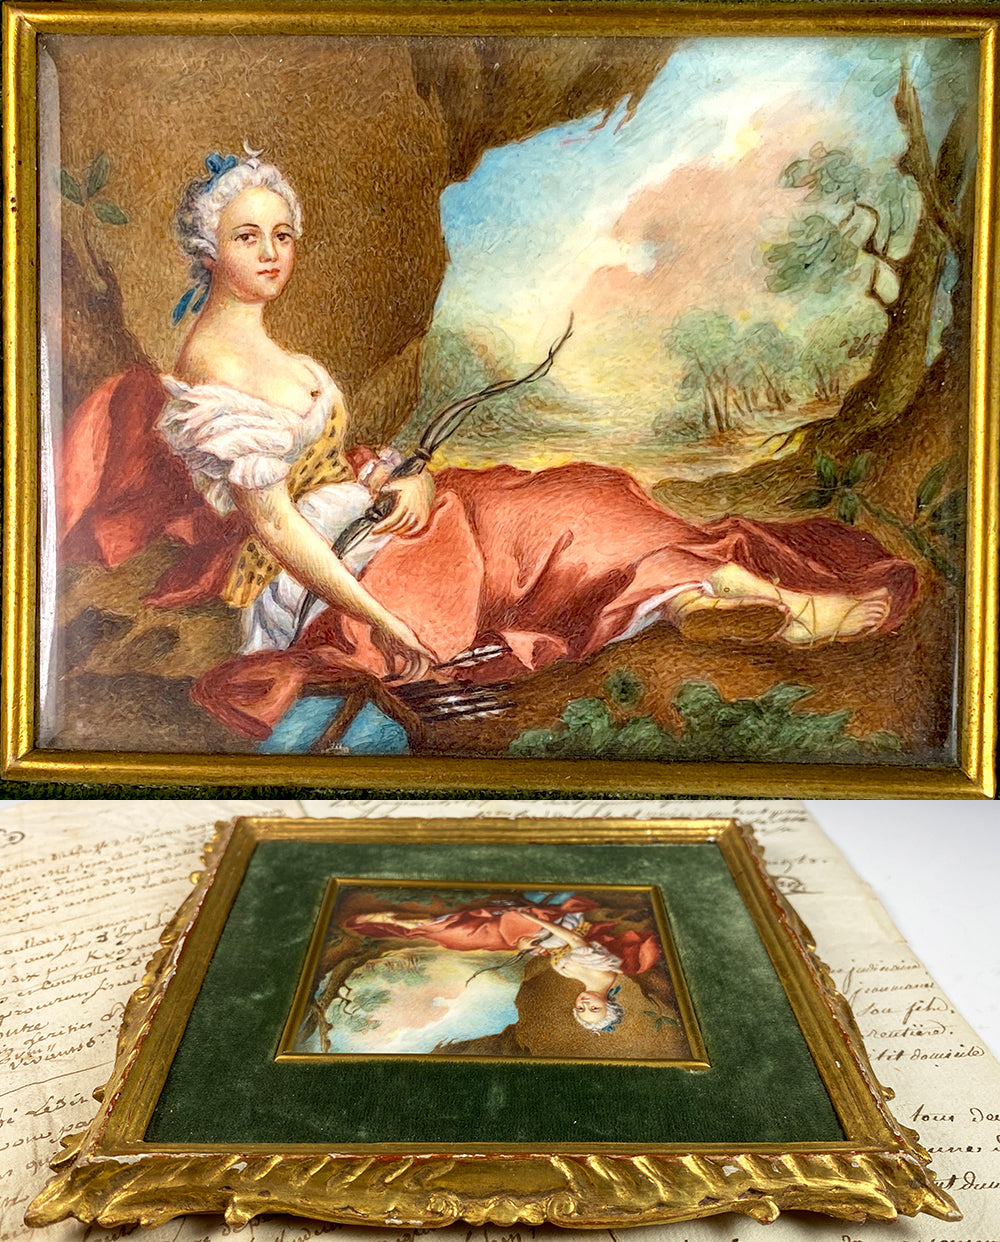 Fine 19th c. Antique Portrait Miniature ápres Nattier's "Maria Adelaide as Diana" the Huntress